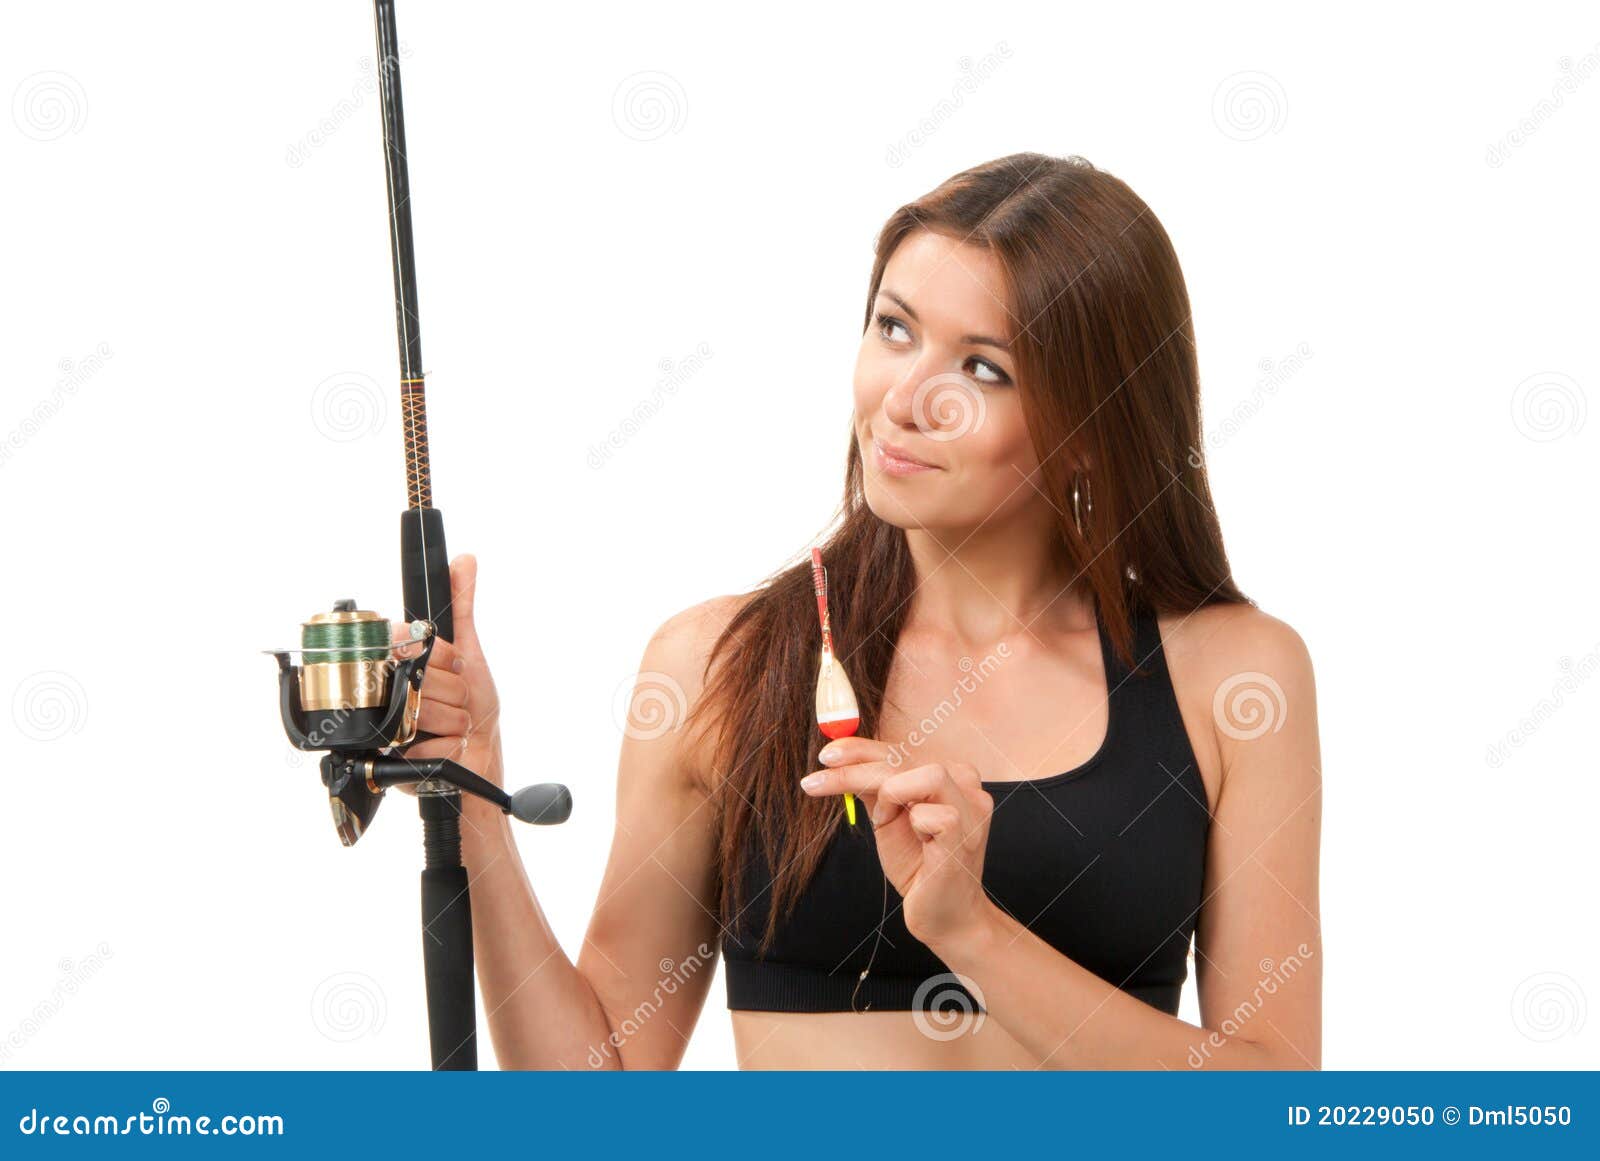 Woman Fishing Pole Rod with Reel Stock Photo - Image of pole, girl